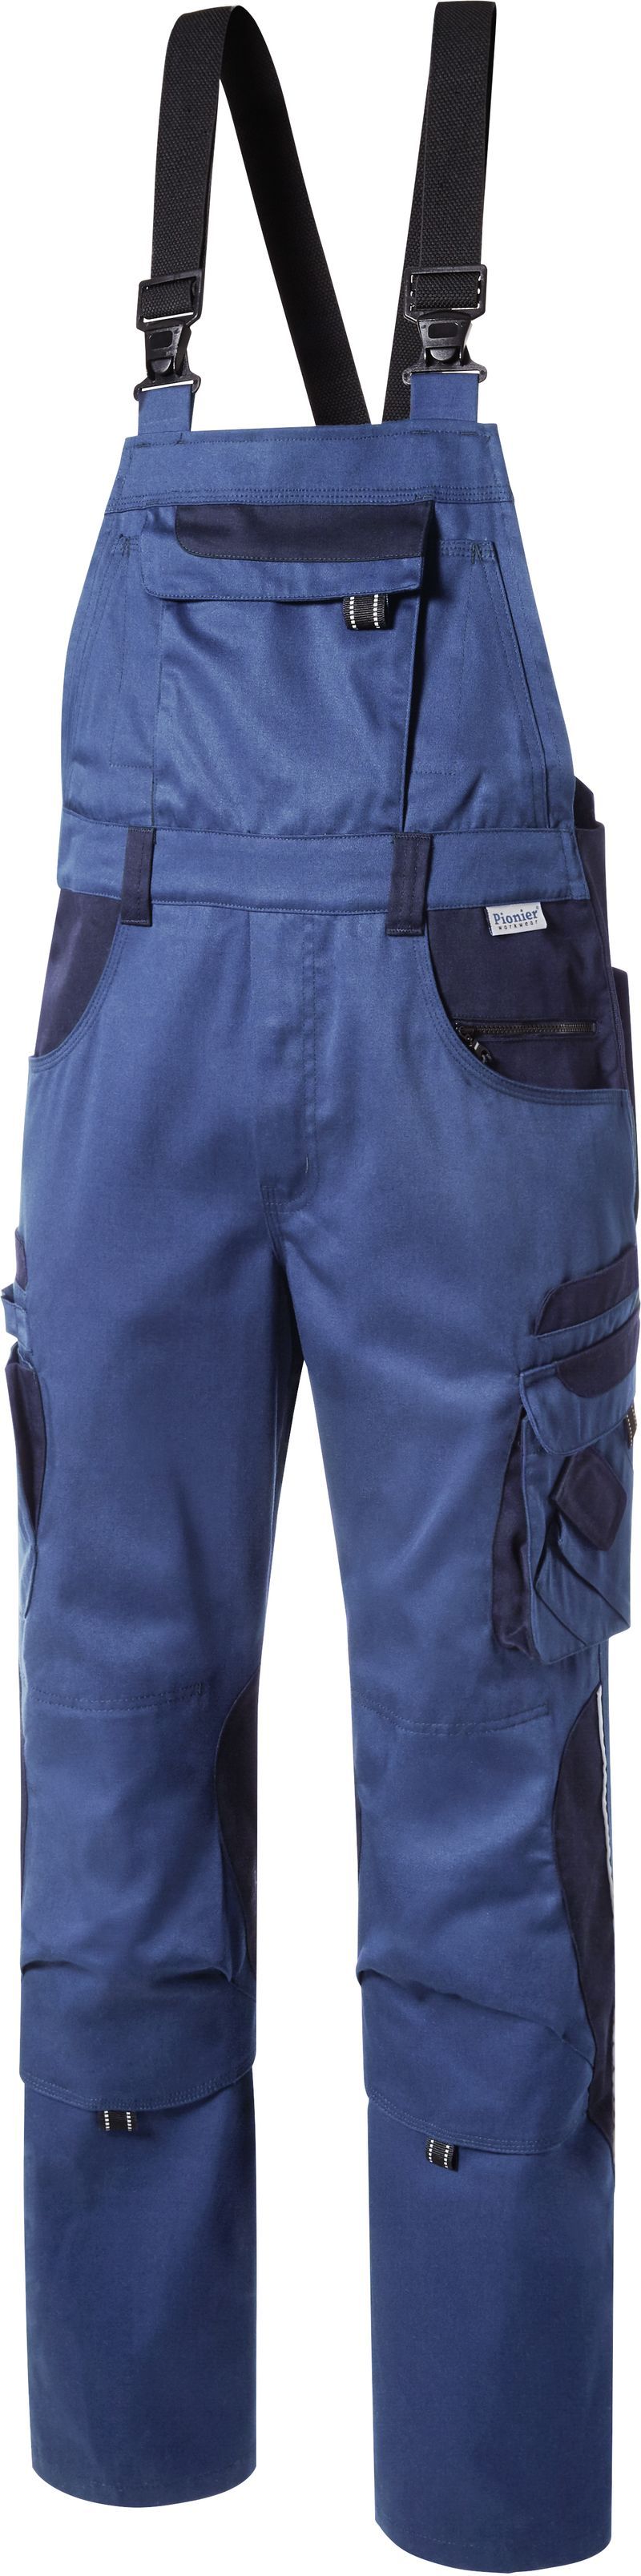 PIONIER-Workwear, Arbeits-Berufs-Latz-Hose, TOOLS, 285g/m, nordic/blue